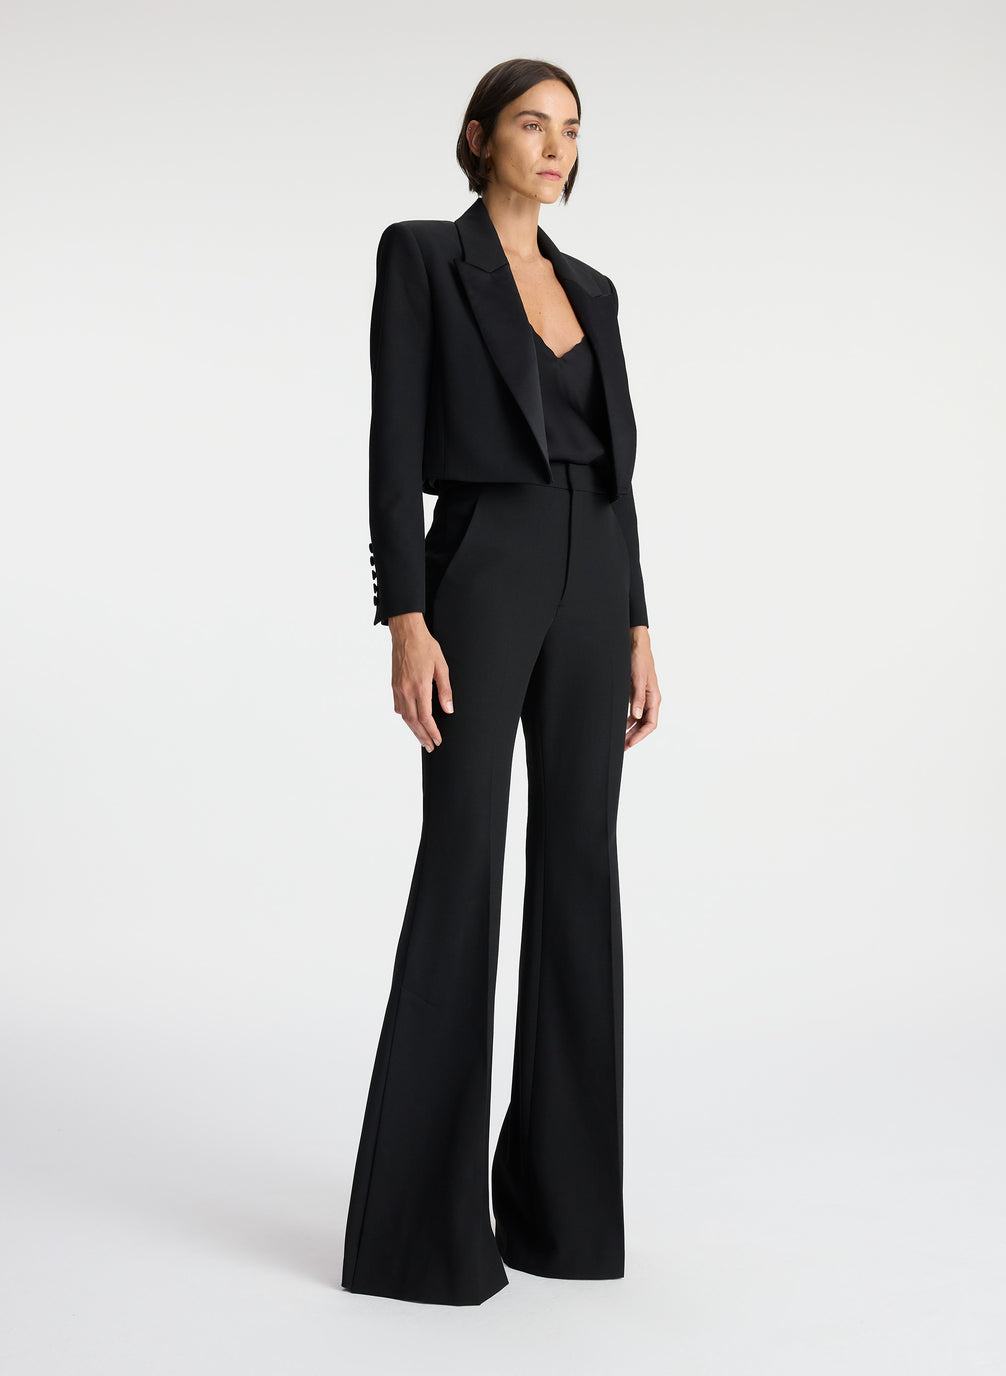 Blazer Women Classic Casual Designs Ladies Suit Women Tuxedo Suits